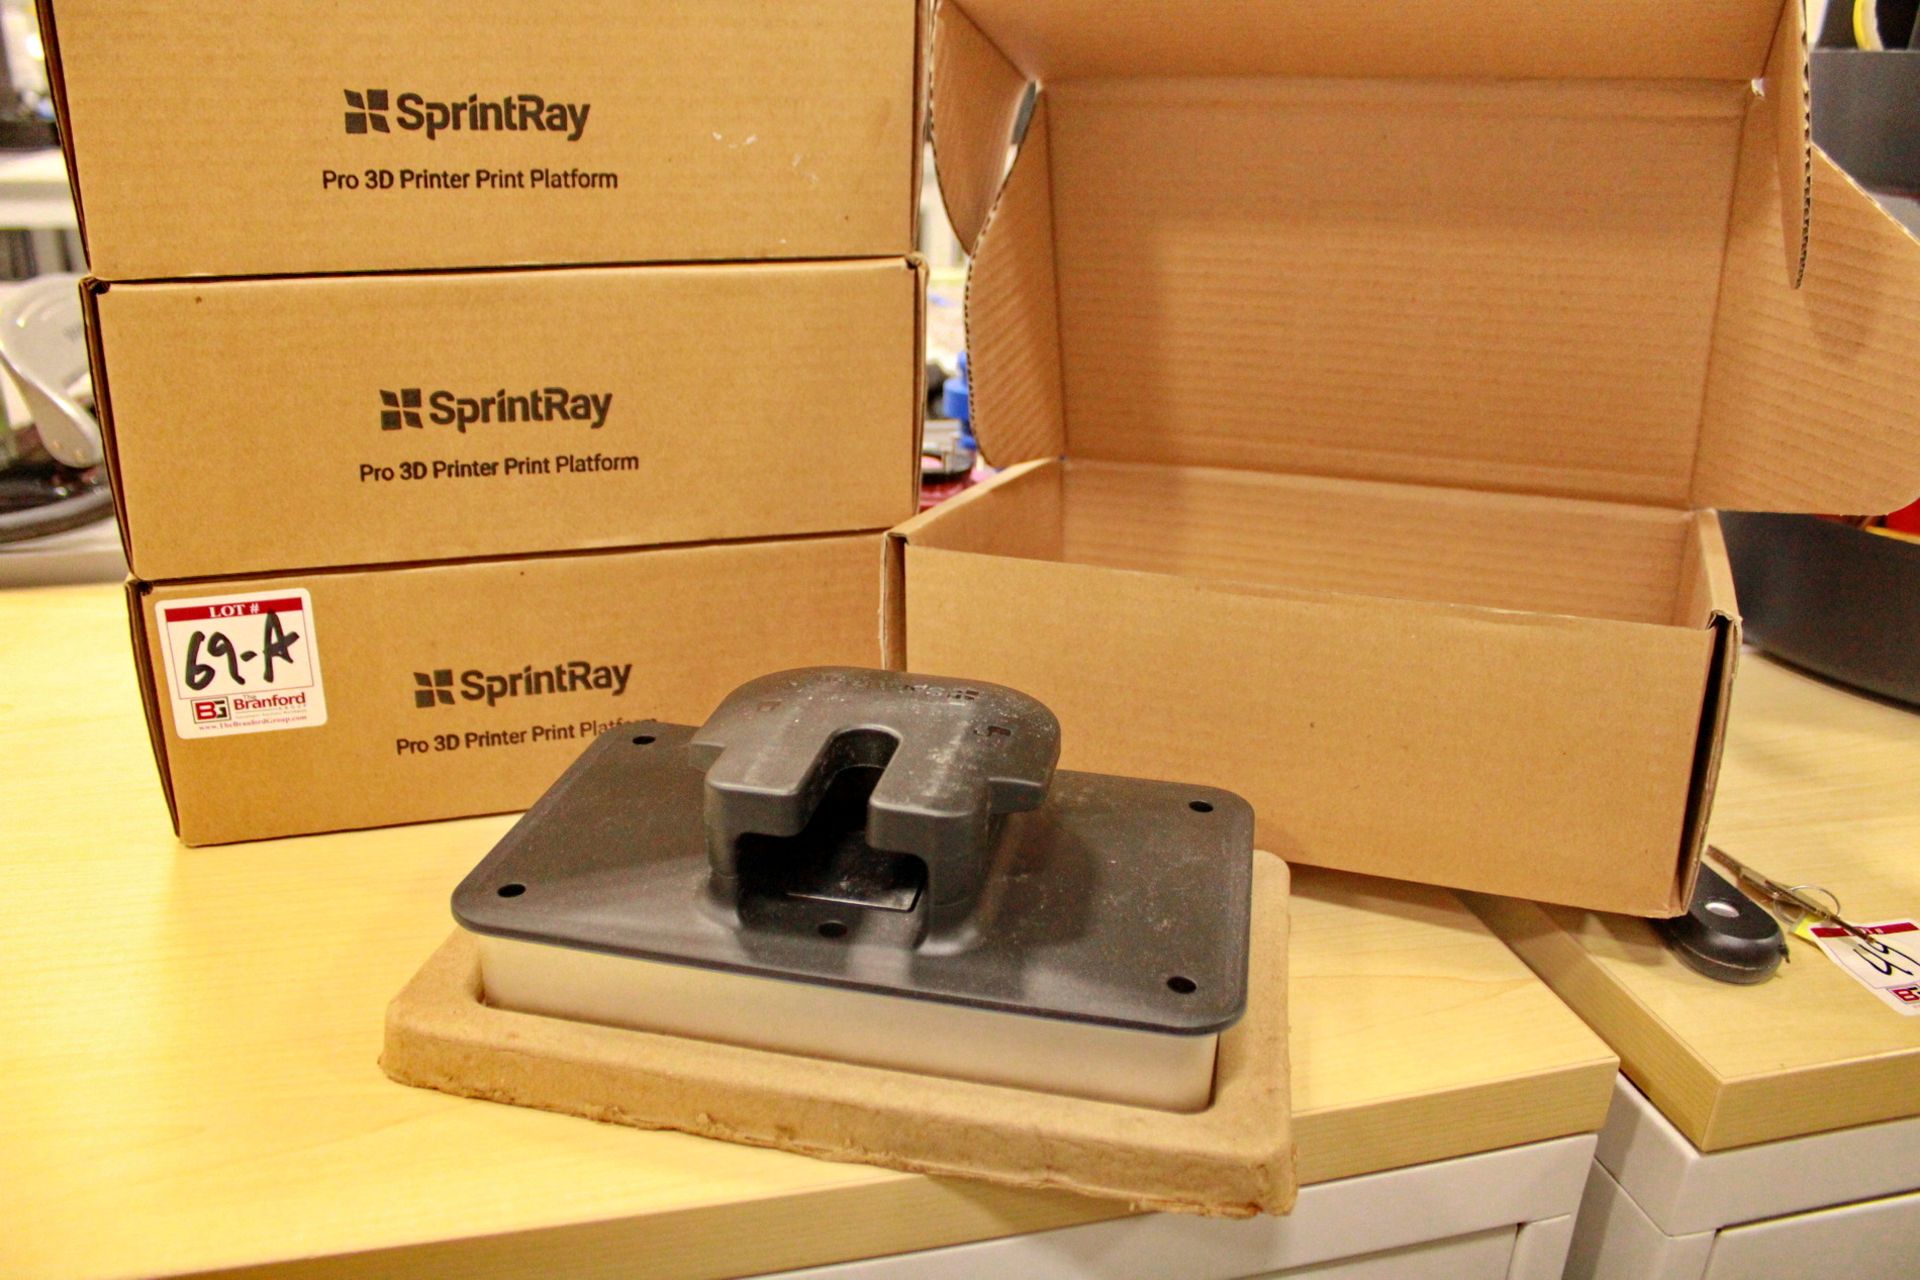 (4) SprintRay Pro 3D Printer Print Platforms